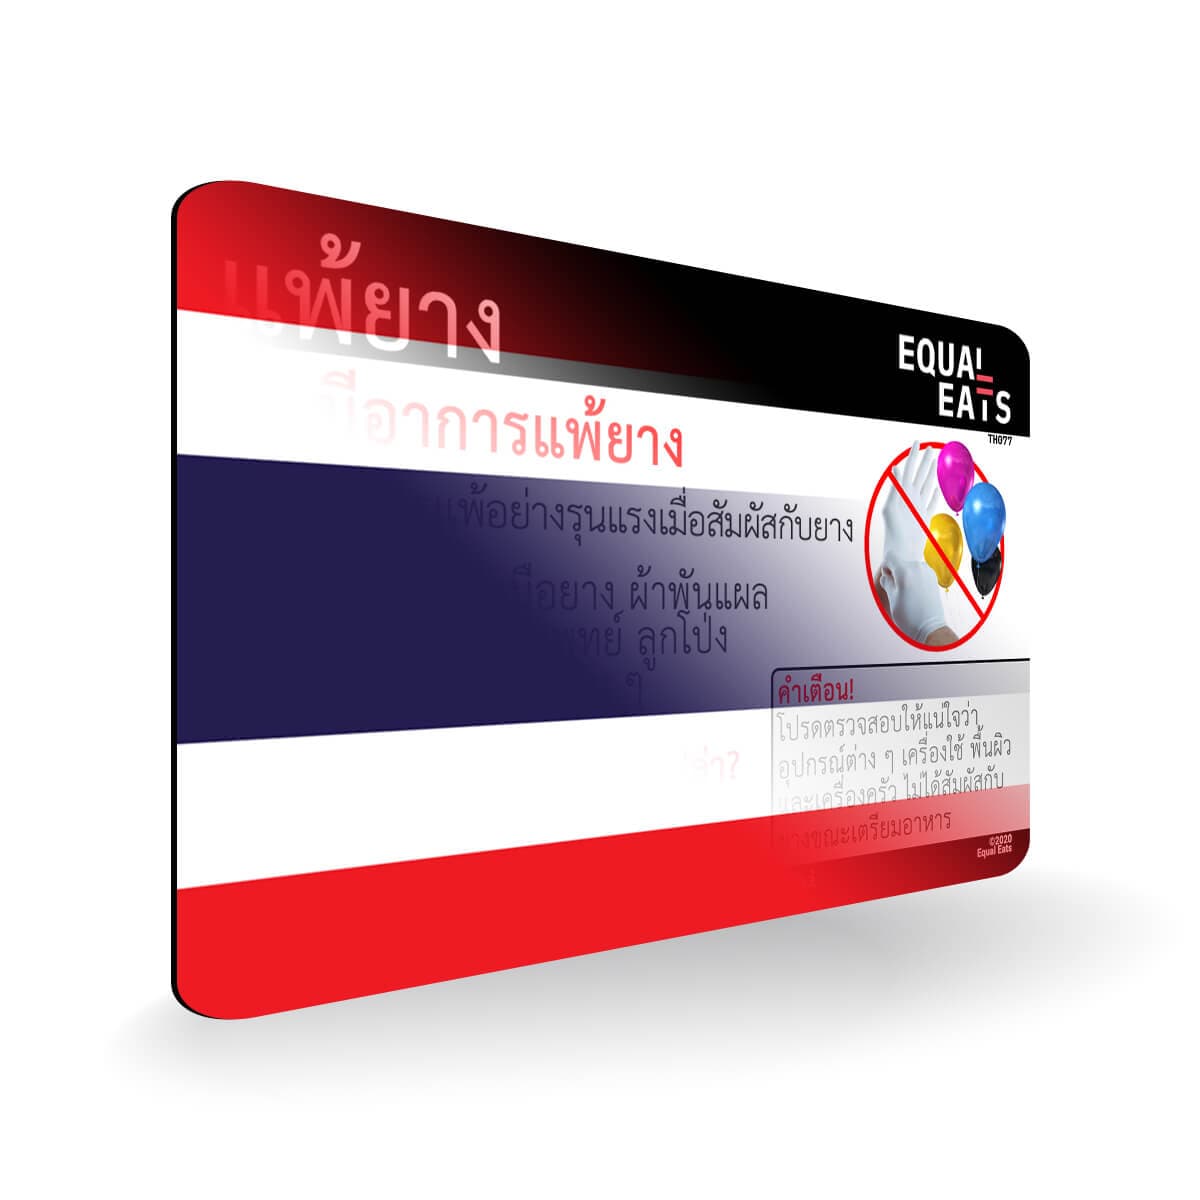 Latex Allergy in Thai. Latex Allergy Travel Card for Thailand